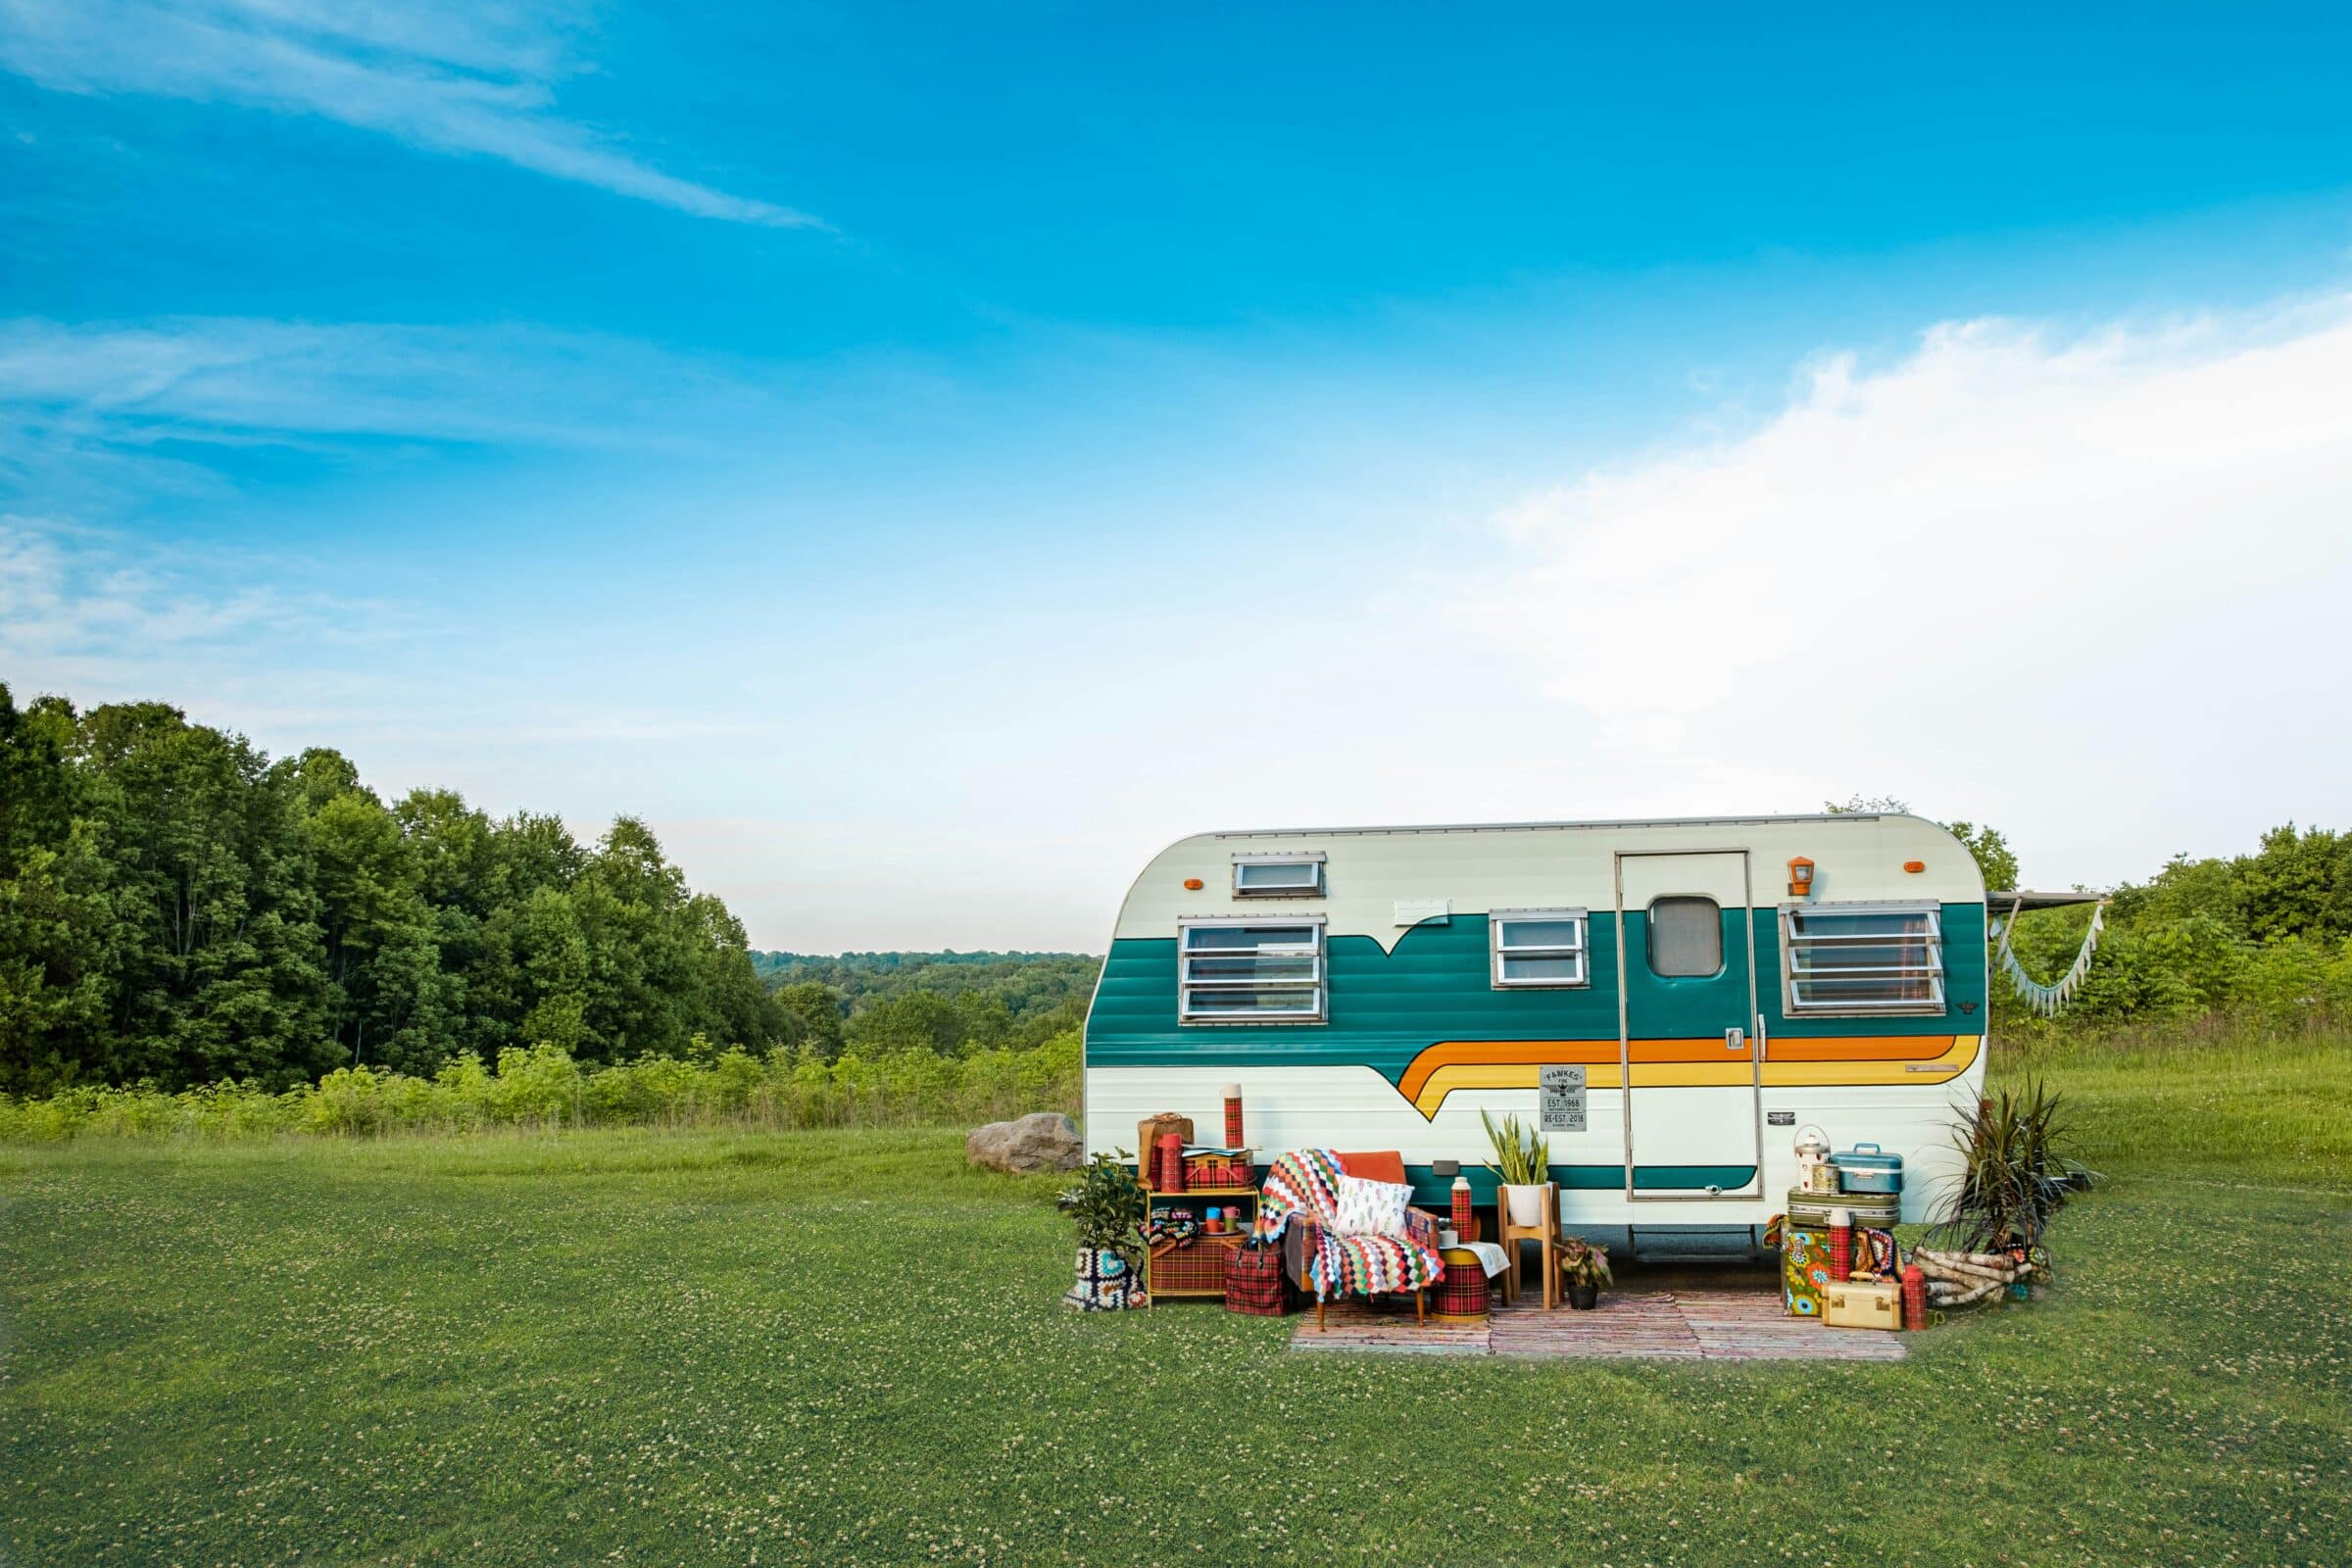 Affichage au camping | Camping-car ou caravane ?